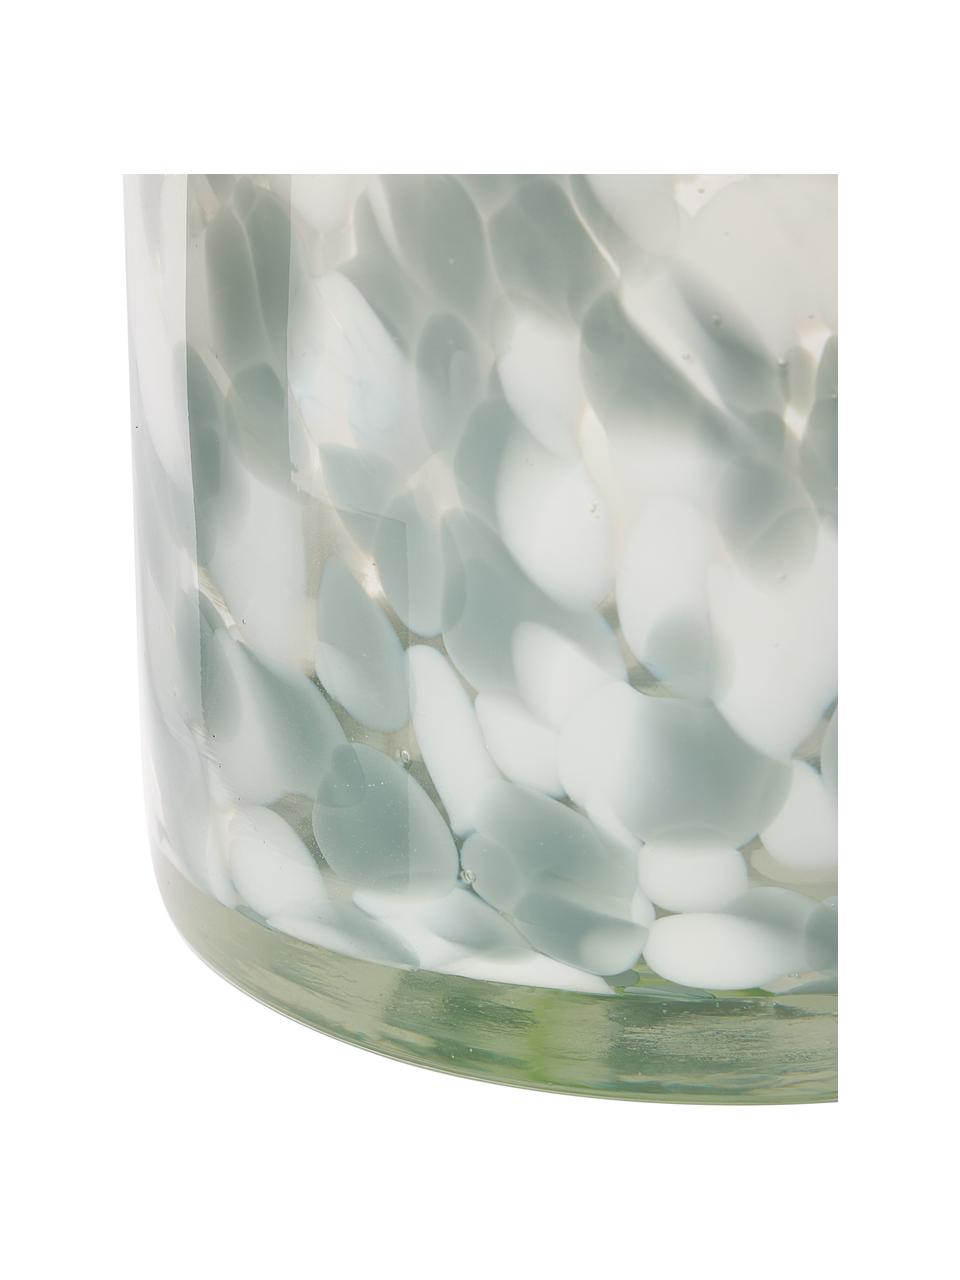 Waxinelichthouder Bablu met polkadot patroon, Glas, Groen, wit, Ø 12 x H 12 cm